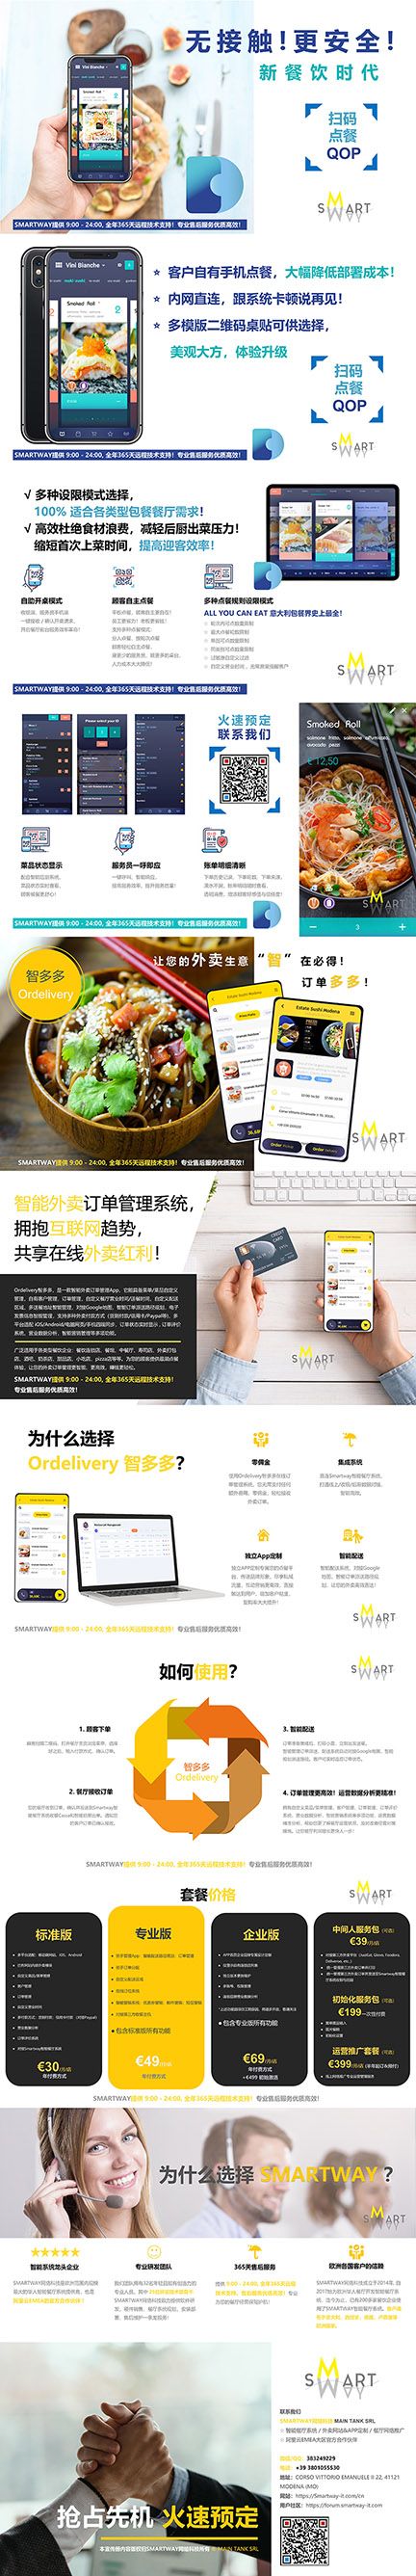 长图s-QOP扫码点餐+Ordelivery外卖App中文版宣传册-0518.jpg